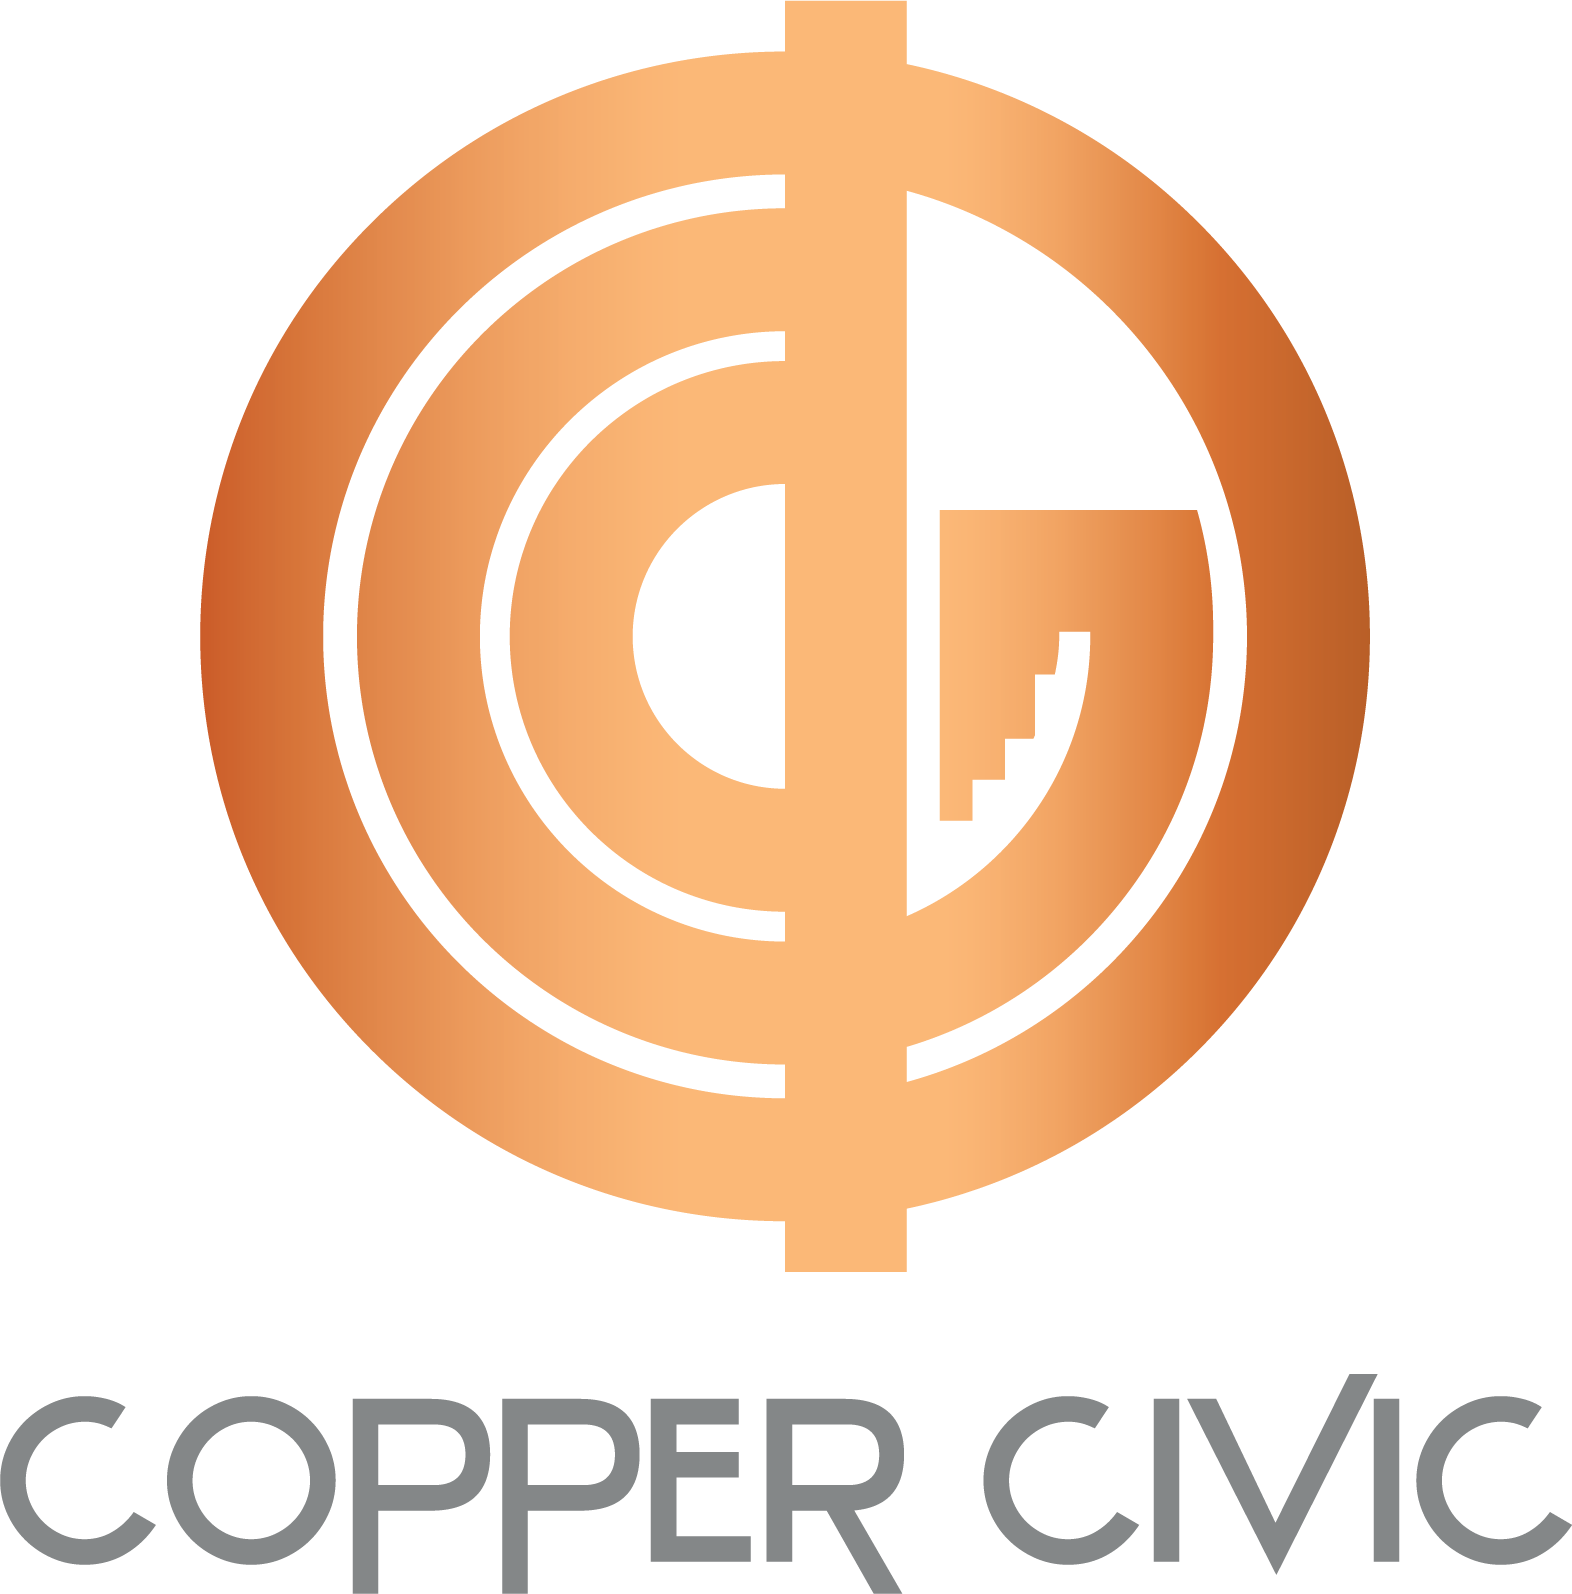 Copper Civic logo